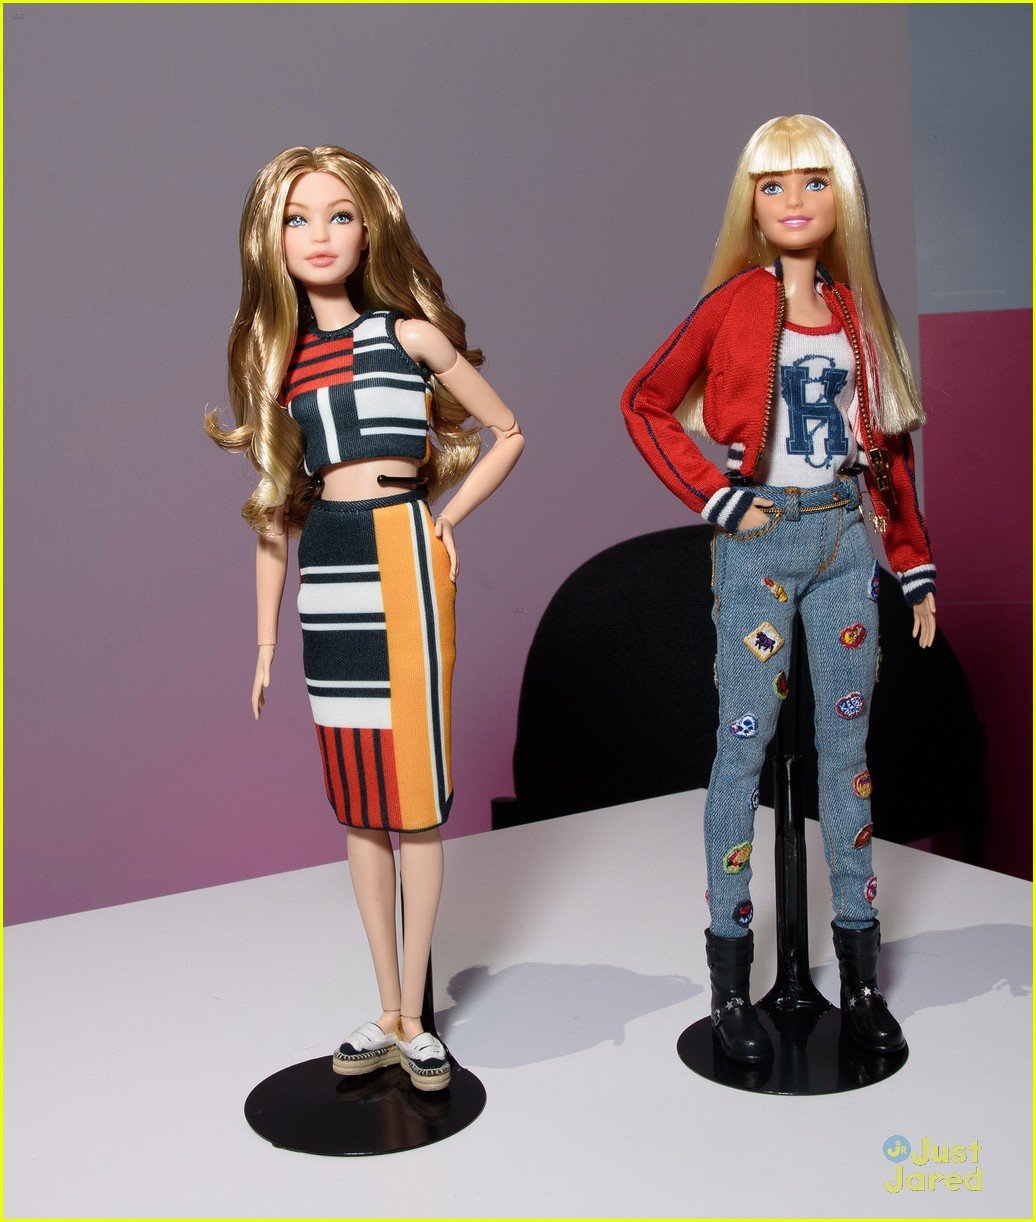 Gigi New Barbie Actually Looks Like Her: Photo | Barbie, Gigi Hadid Pictures | Just Jared Jr.